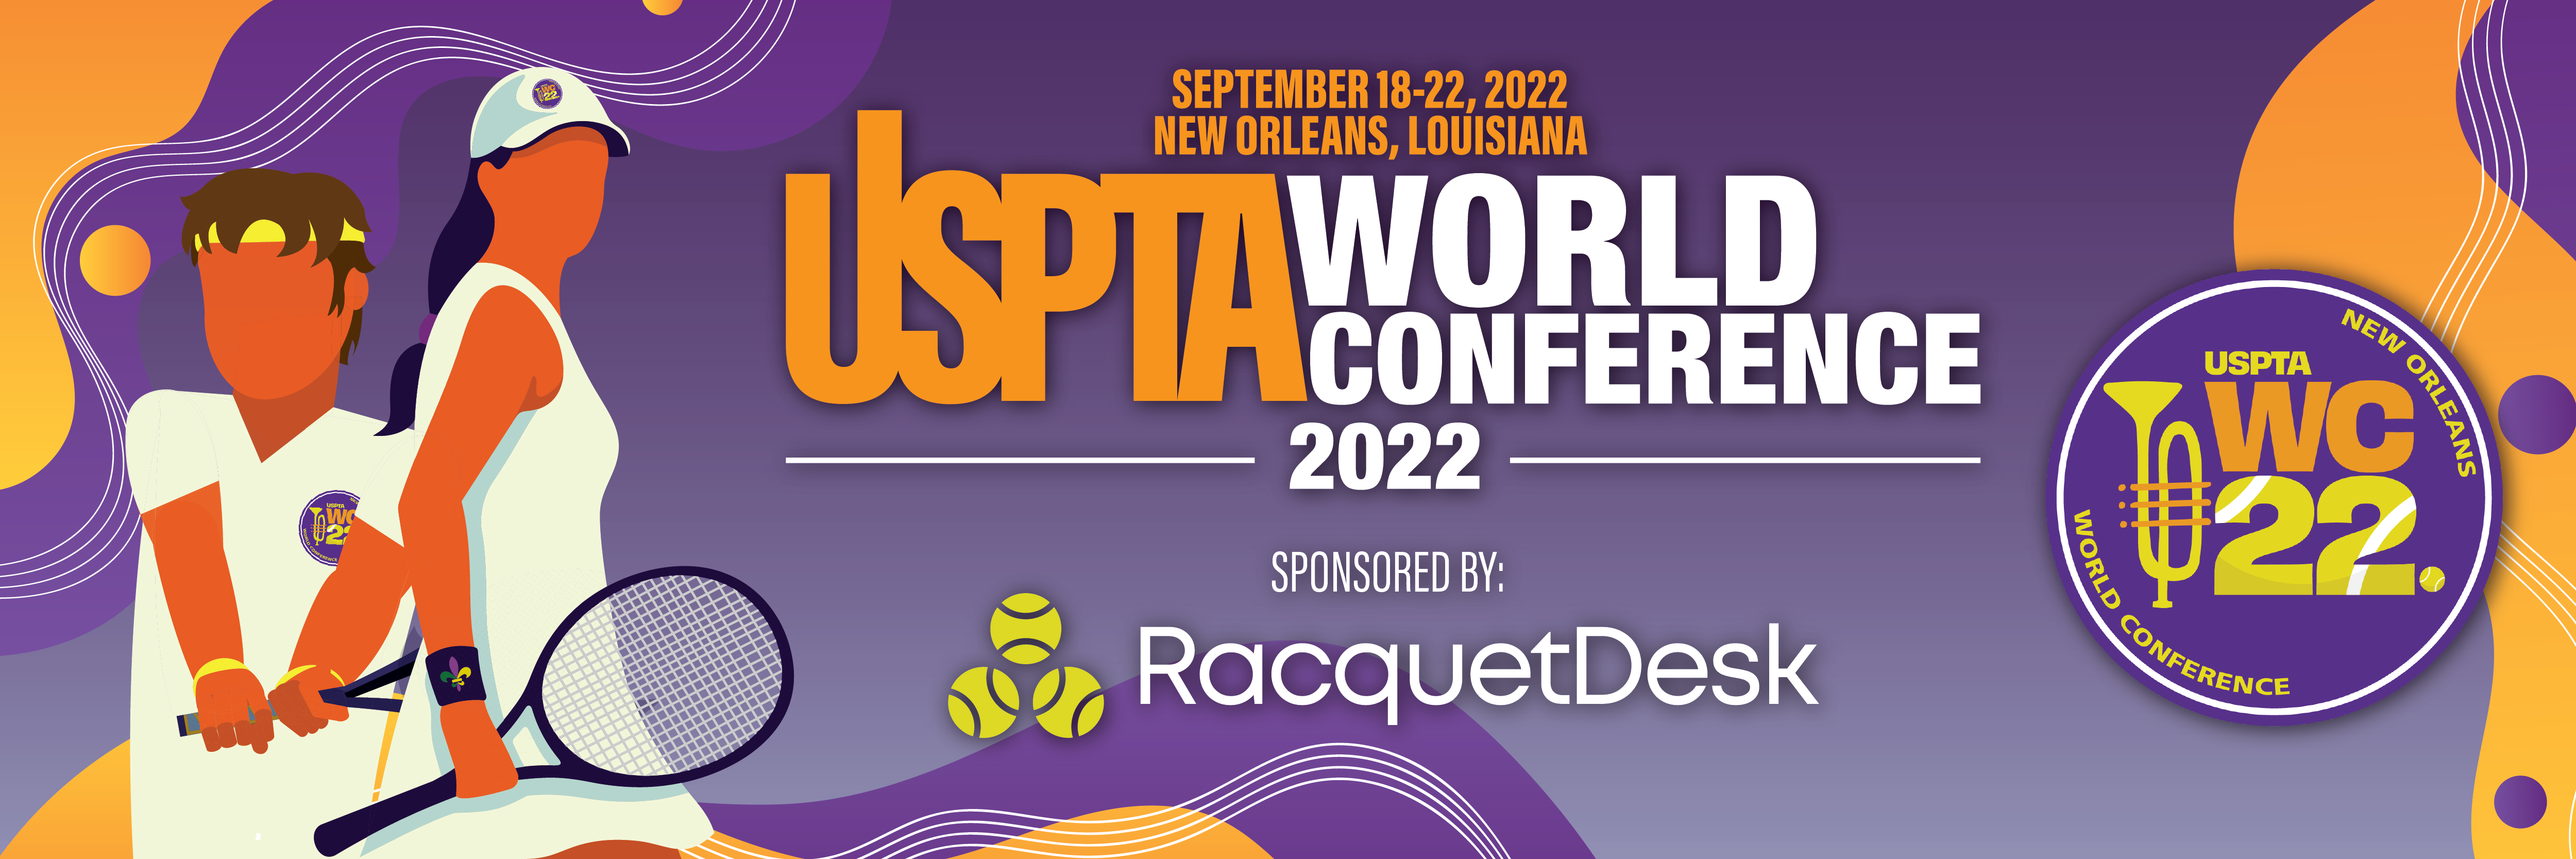 Display event USPTA World Conference 2022